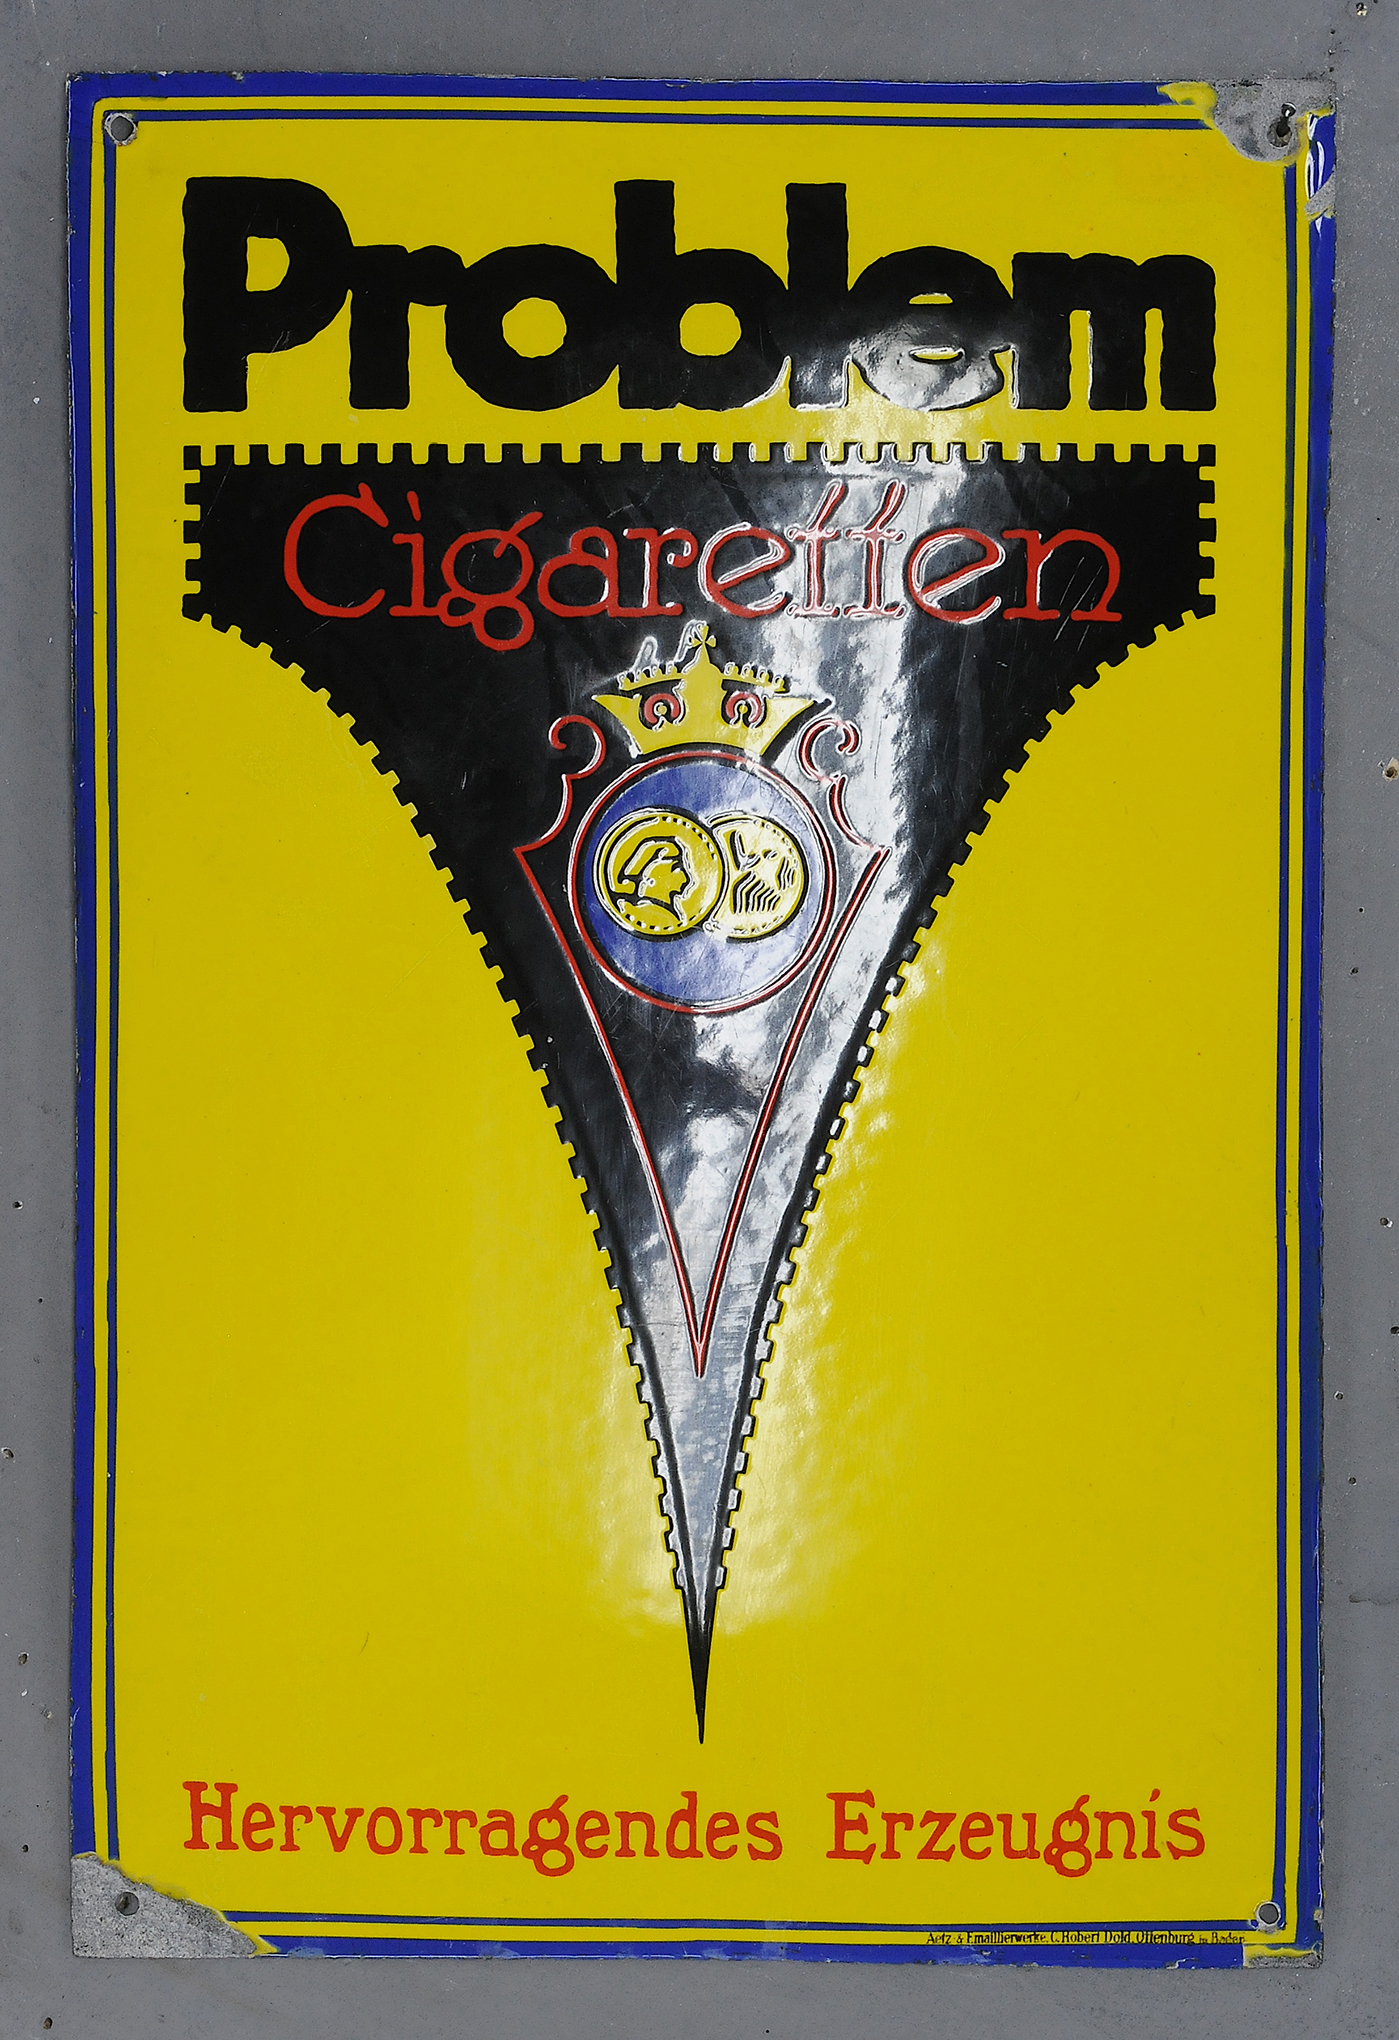 Problem Cigaretten - Image 3 of 3